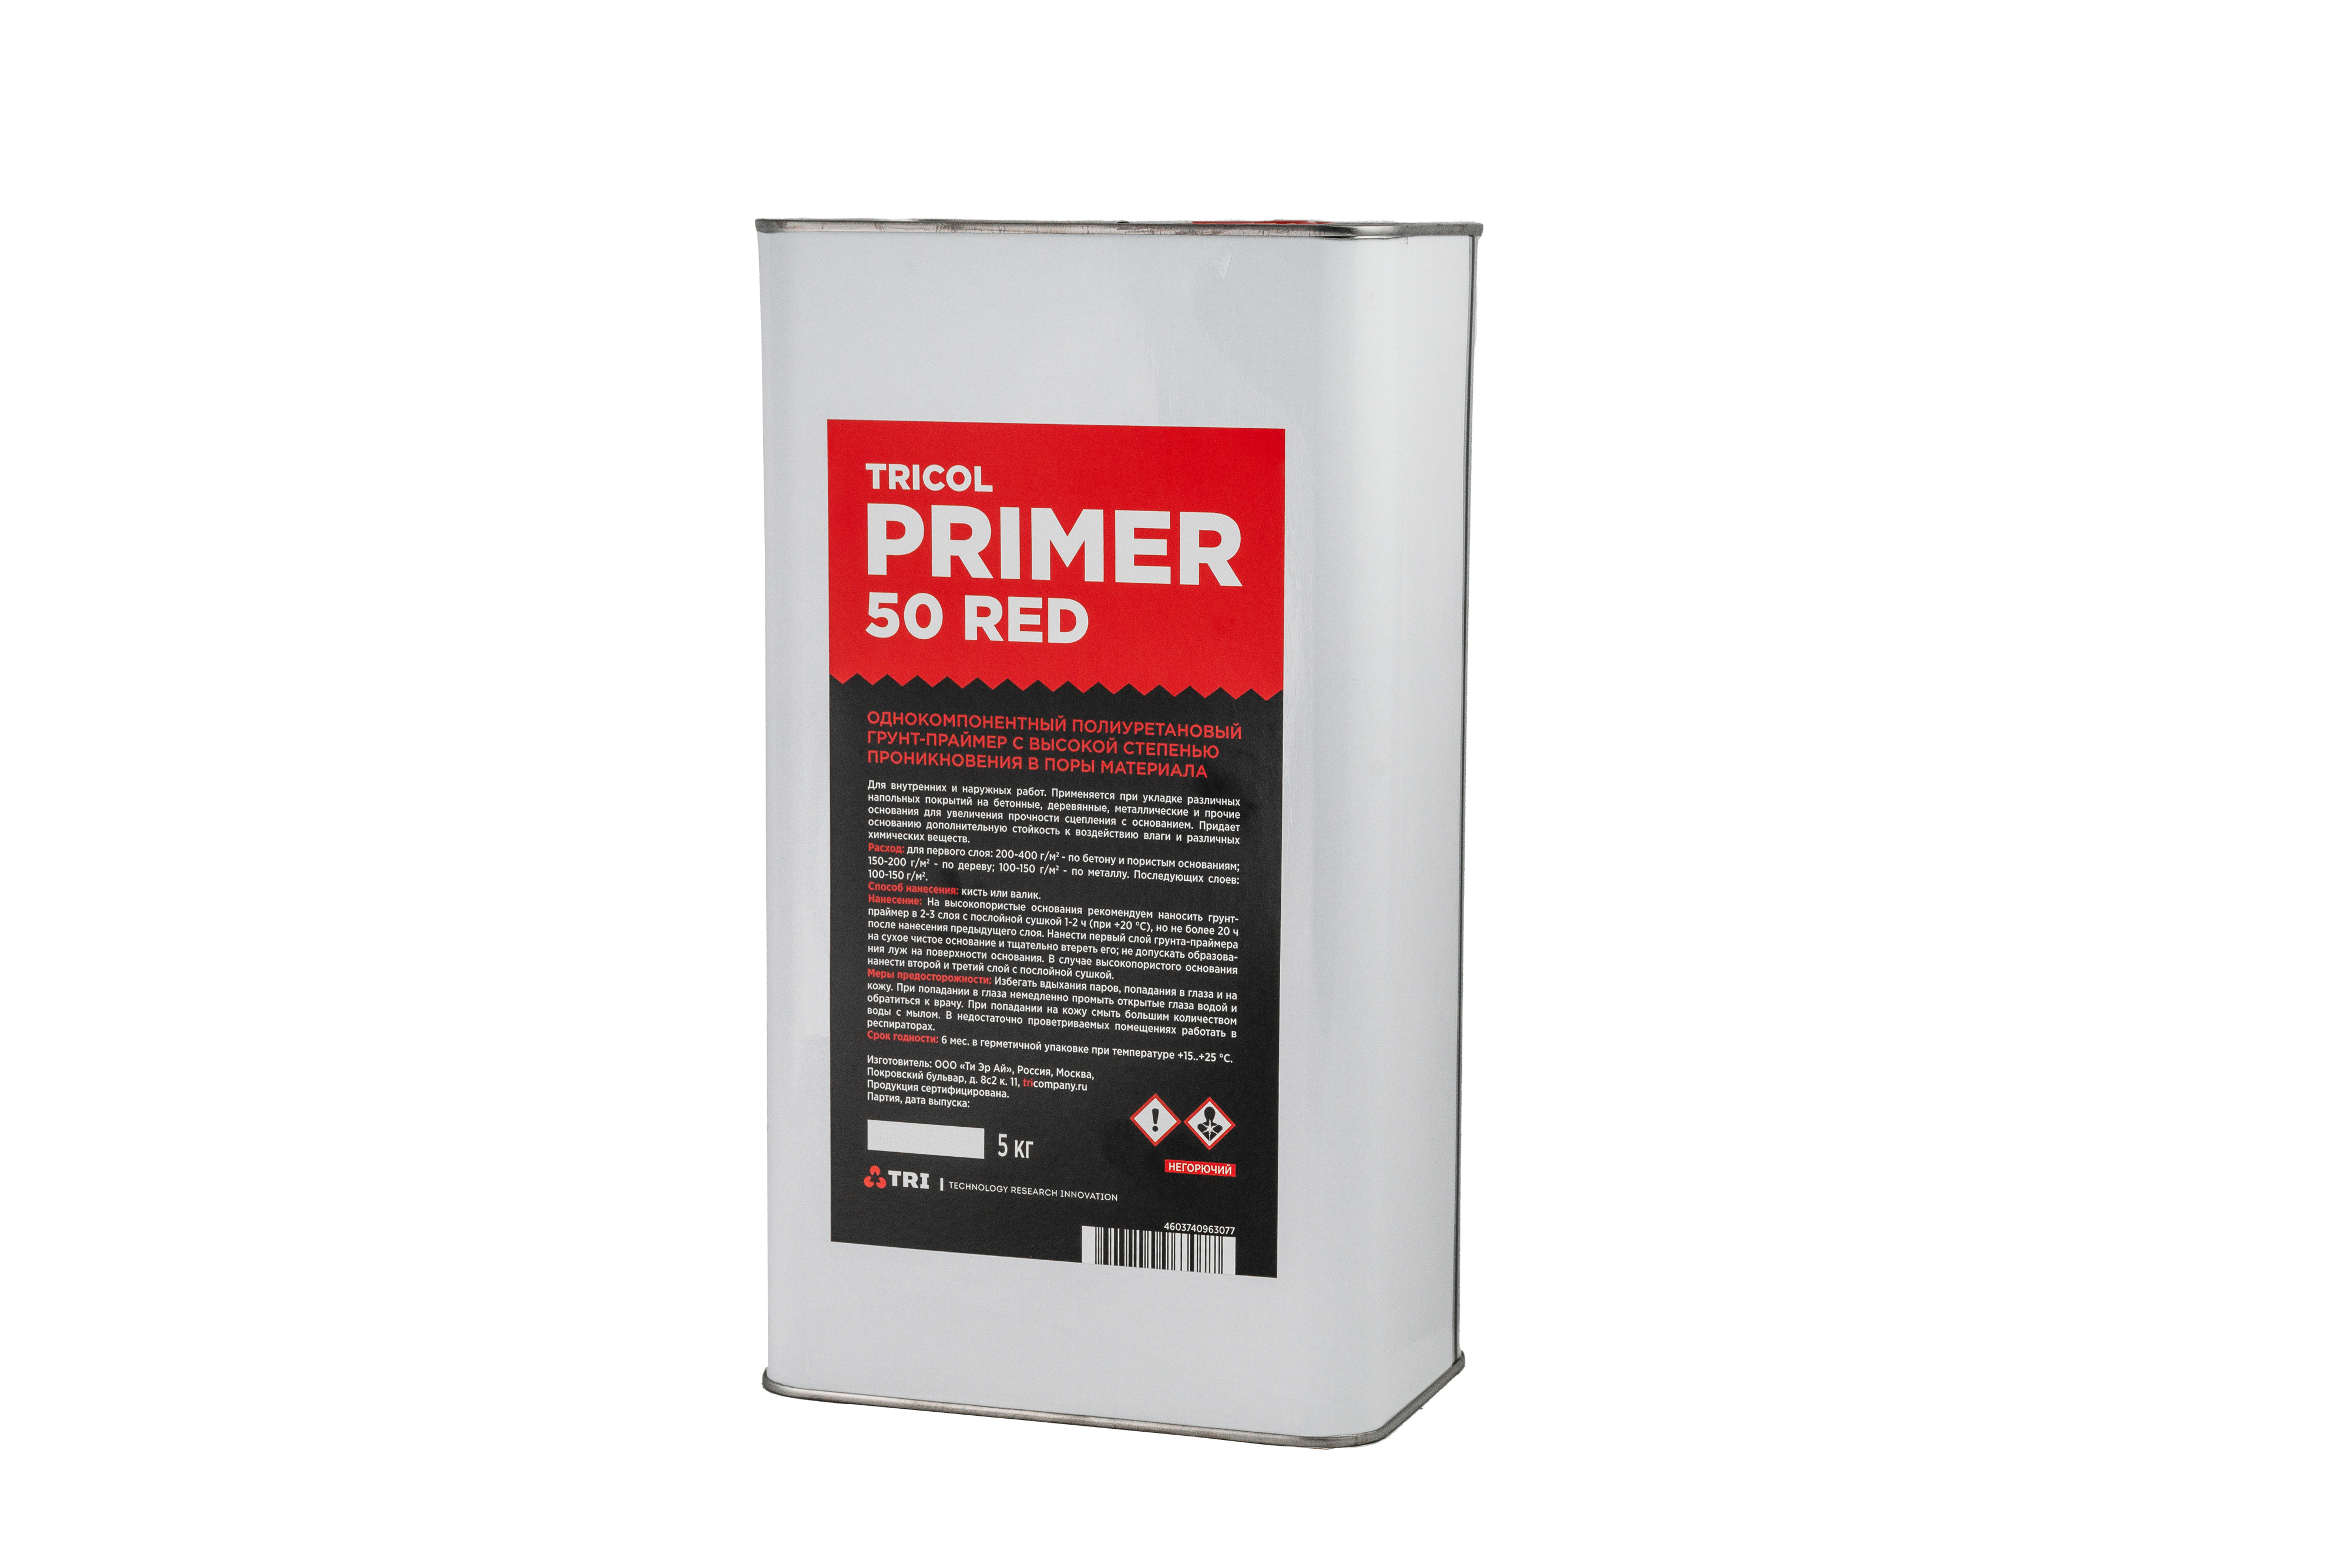 90408375 Однокомпонентный полиуретановый грунт-праймер PRIMER.50 RED STLM-0218558 TRICOL